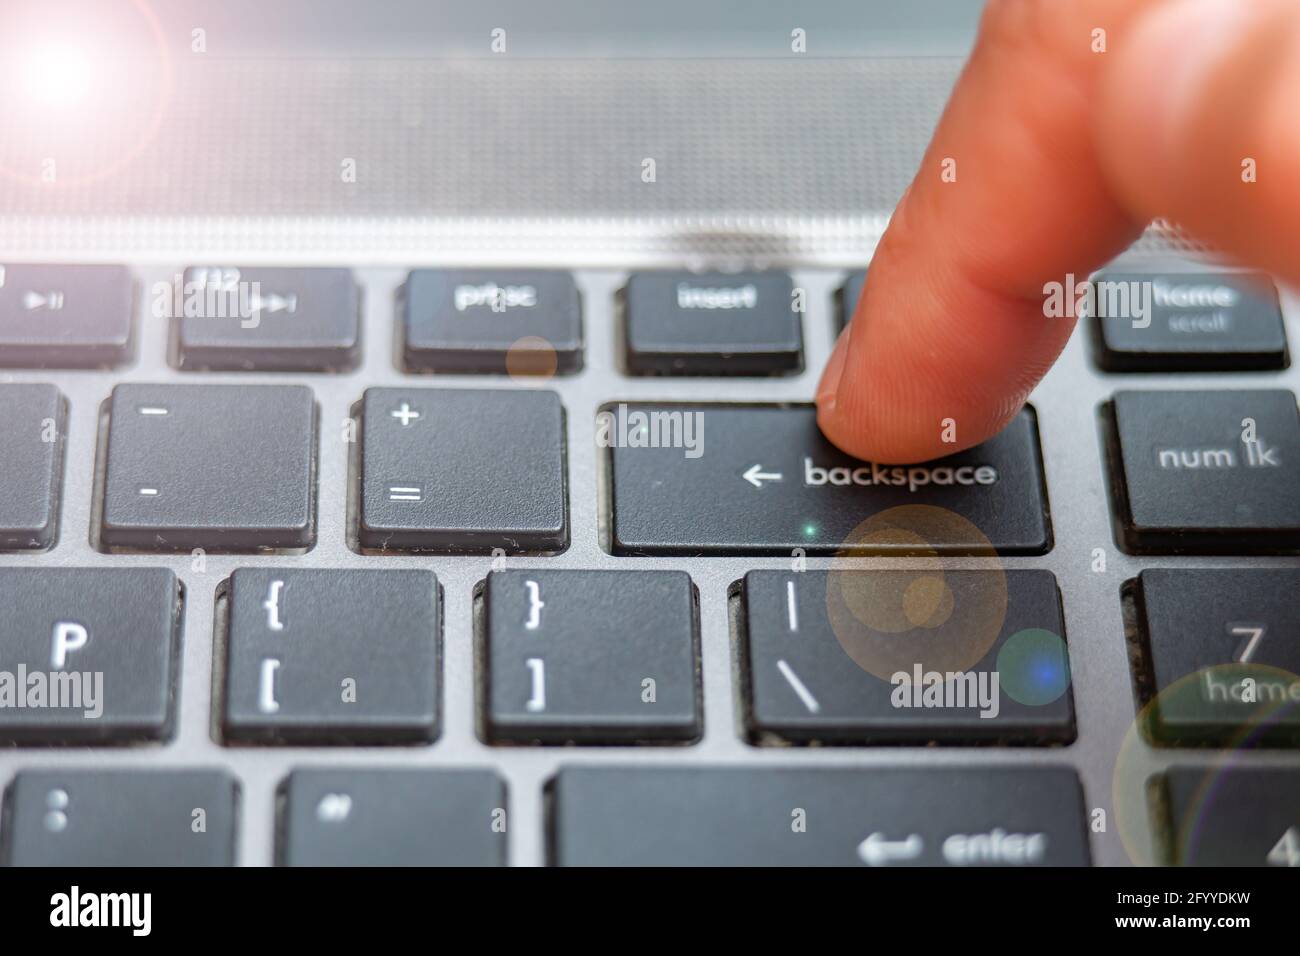 Backspace button pressing a lot of times on keyboard, laptop keyboard close  up Stock Photo - Alamy